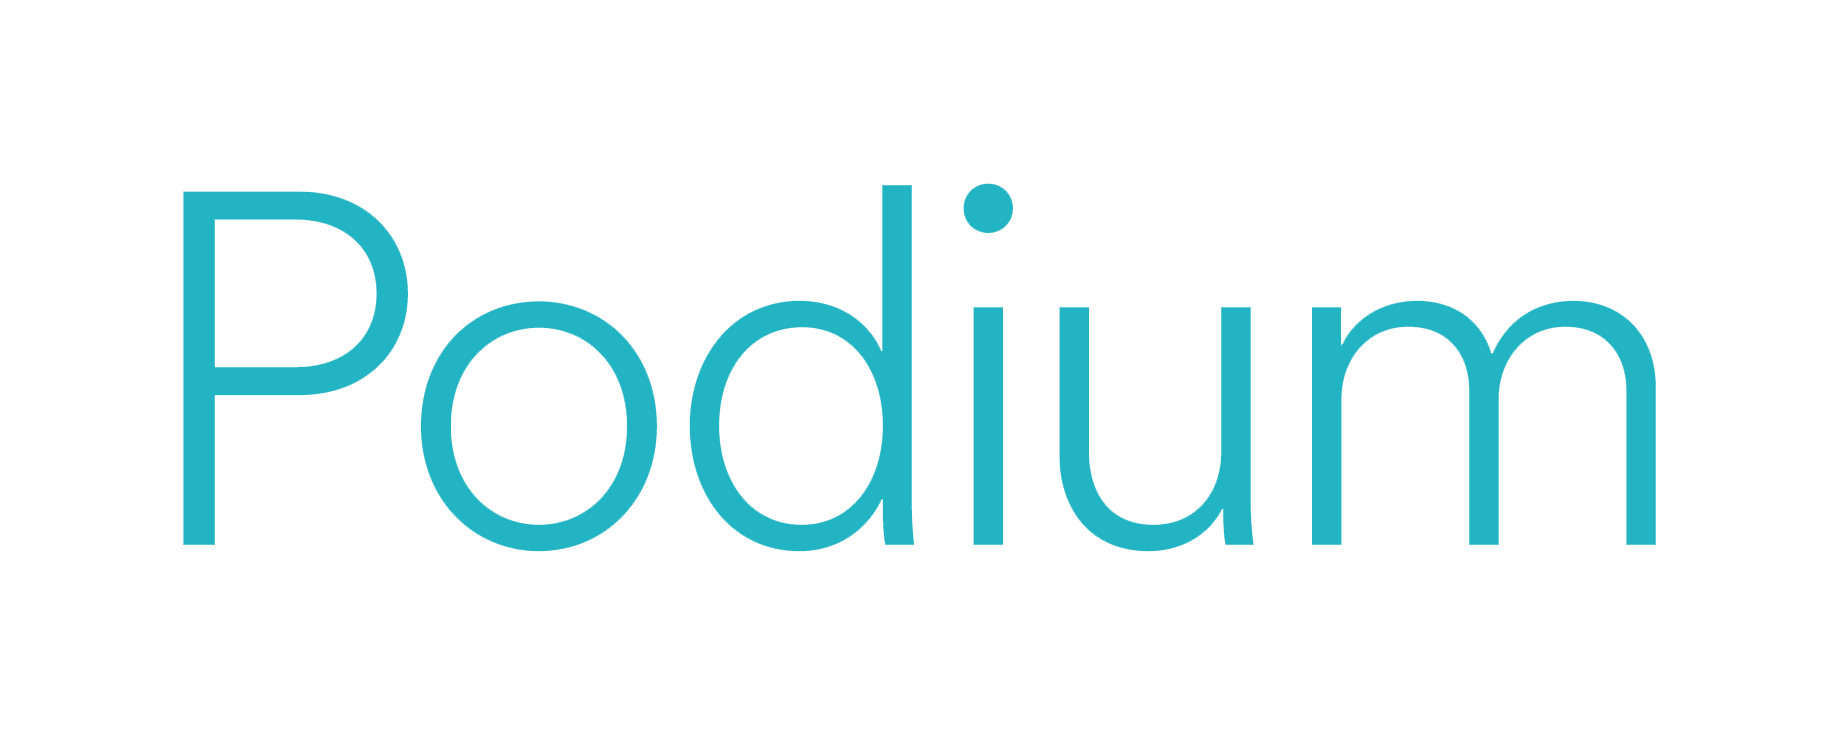 Podium logo